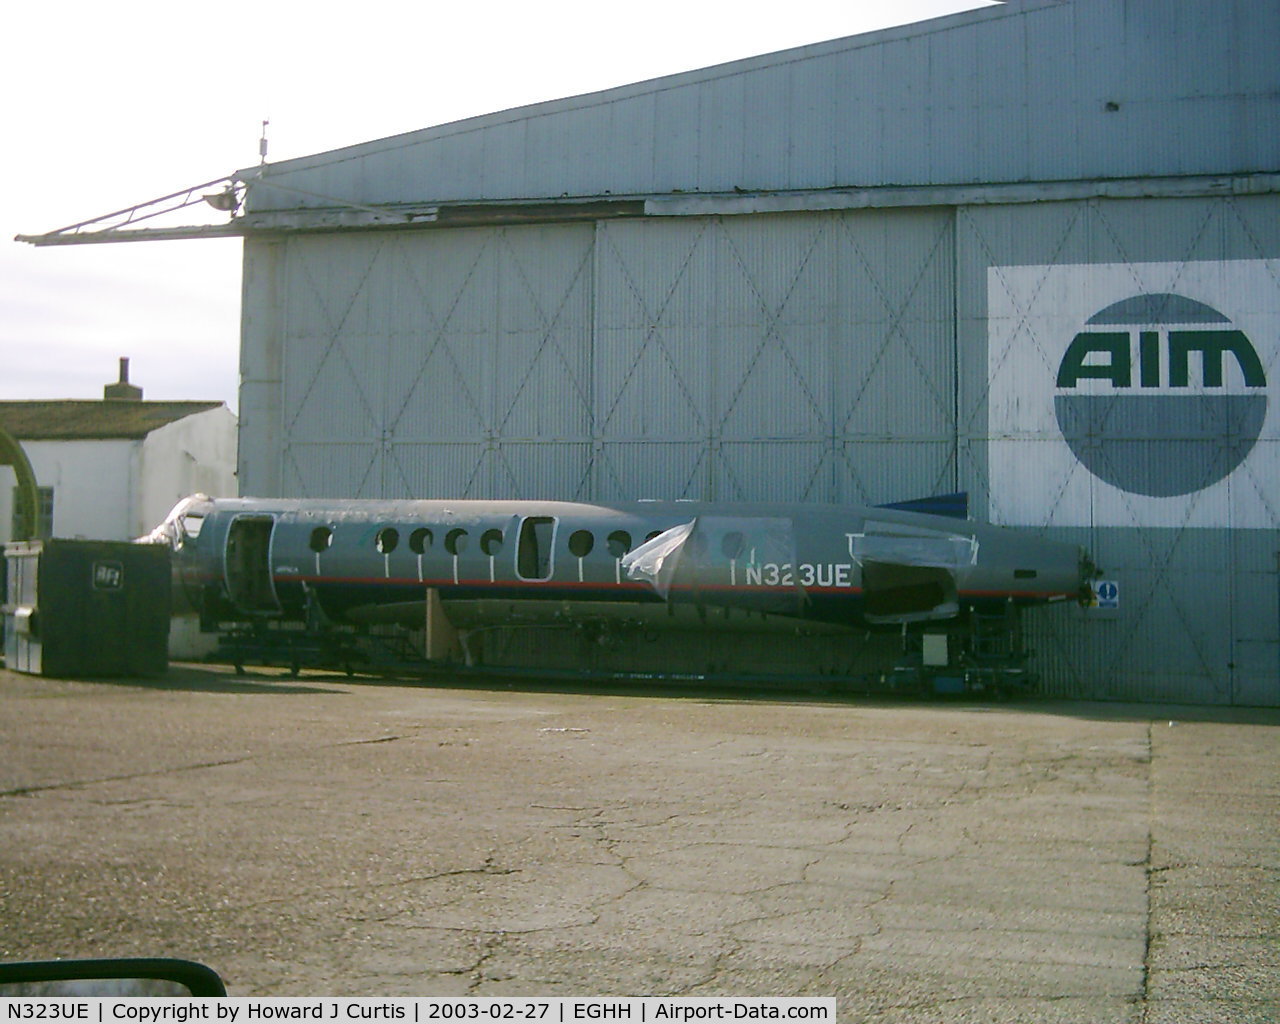 N323UE, 1995 British Aerospace Jetstream 4101 C/N 41059, Fuselage used by AIM for a while.